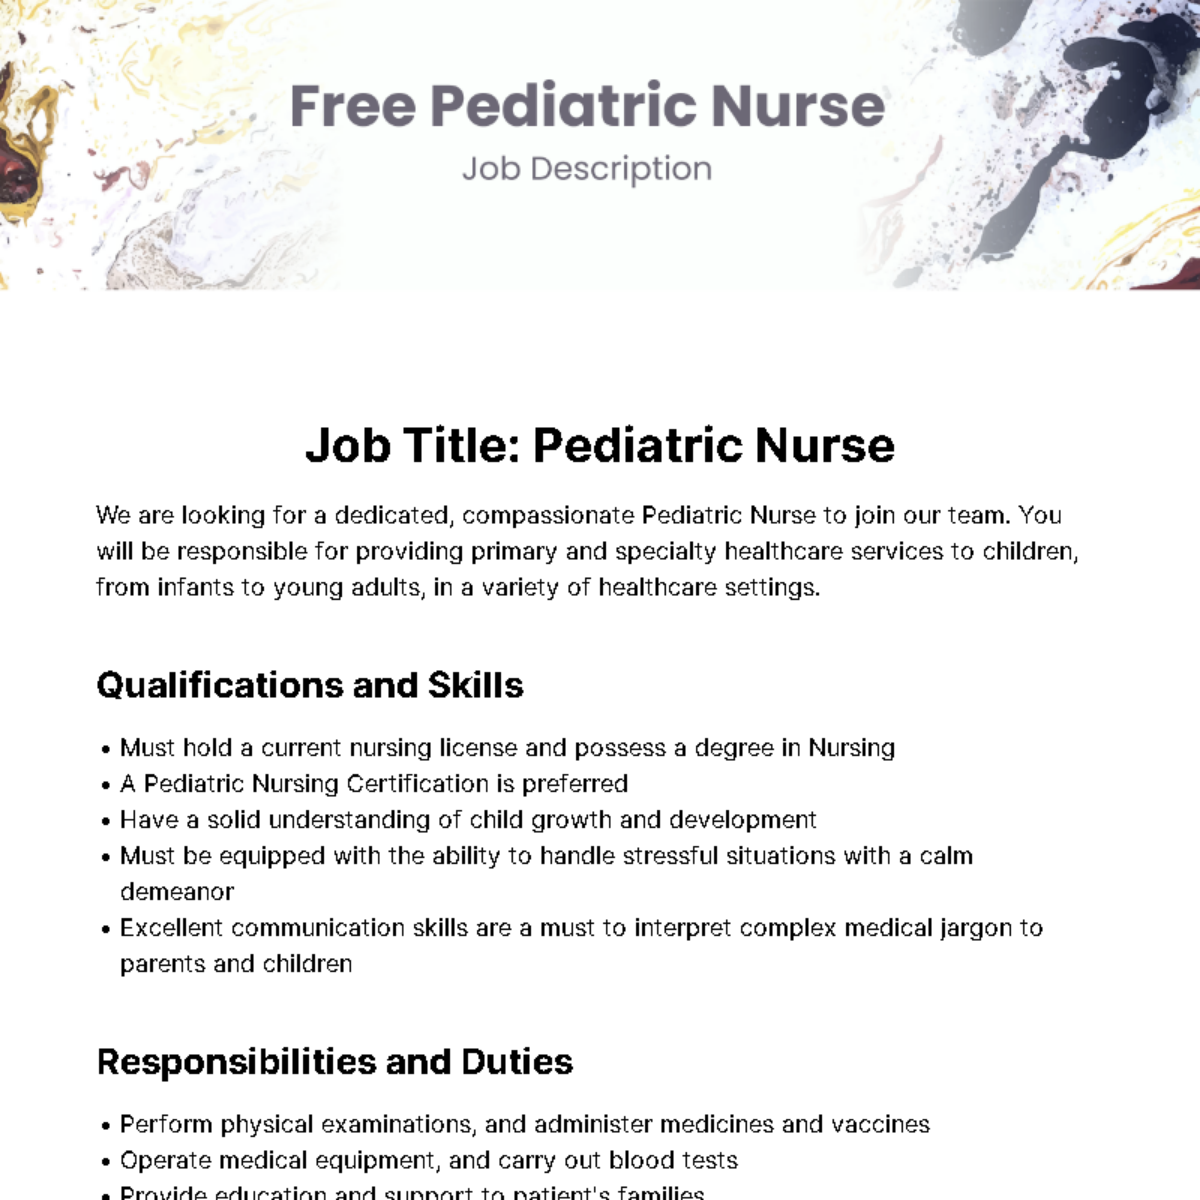 Free Pediatric Nurse Job Description Template